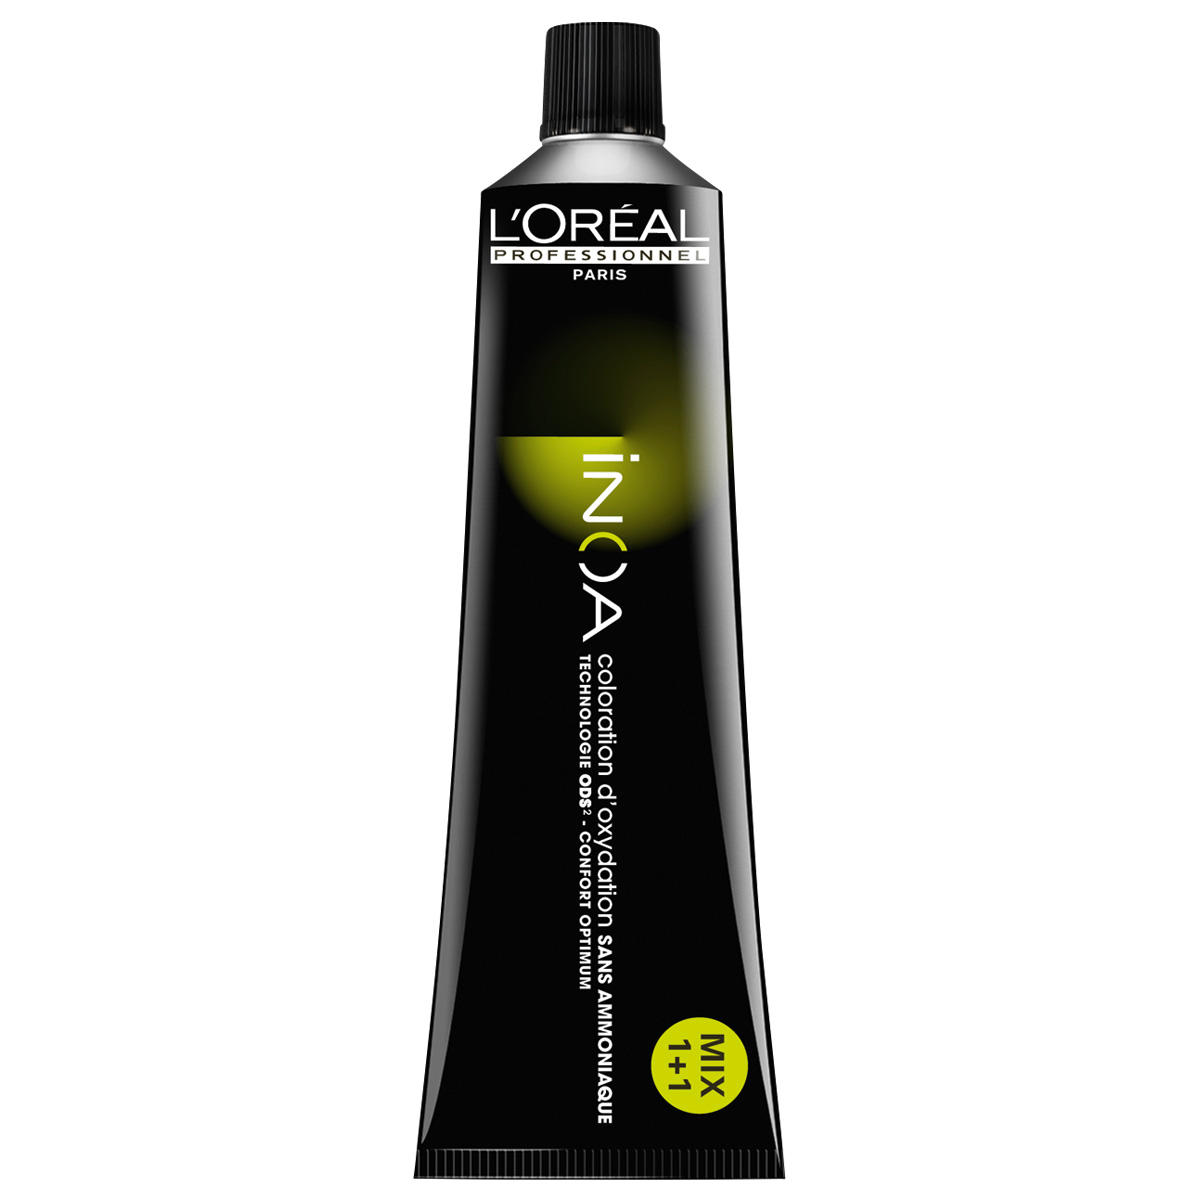 L'Oréal Professionnel Paris Coloration 7,34 Rubio medio dorado cobrizo, tubo 60 ml - 1